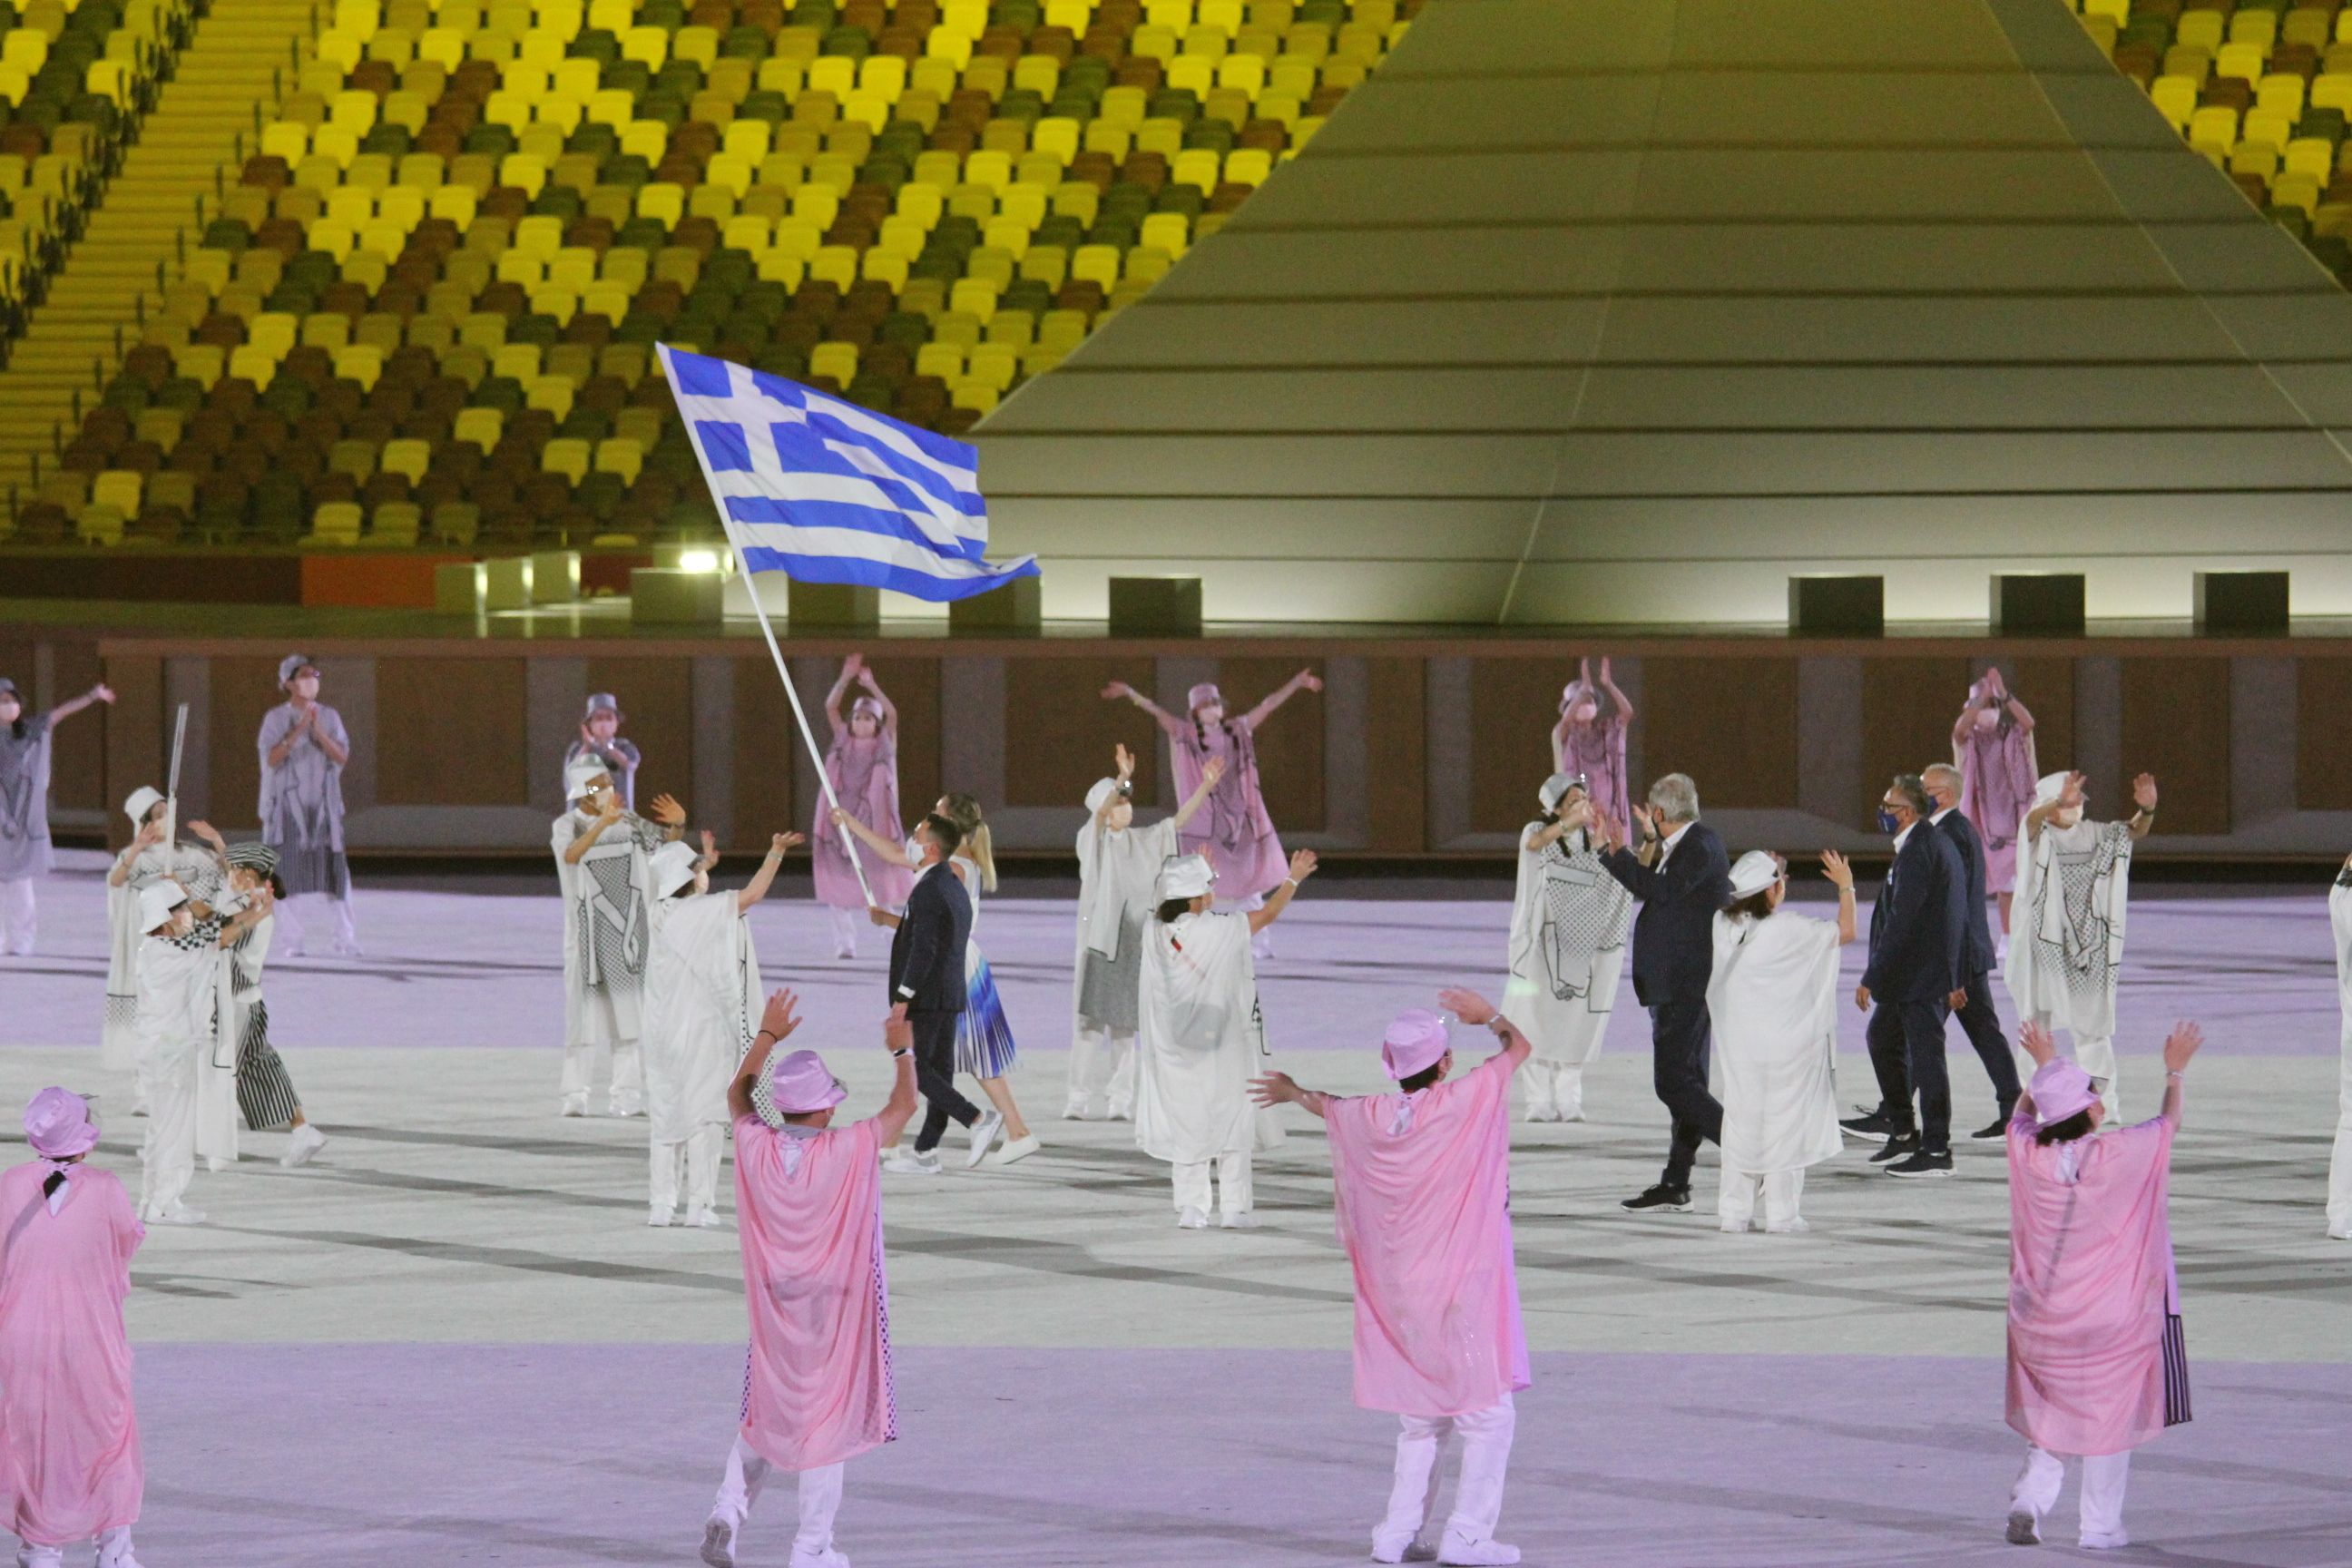 Image of Greece walking into the stadium.